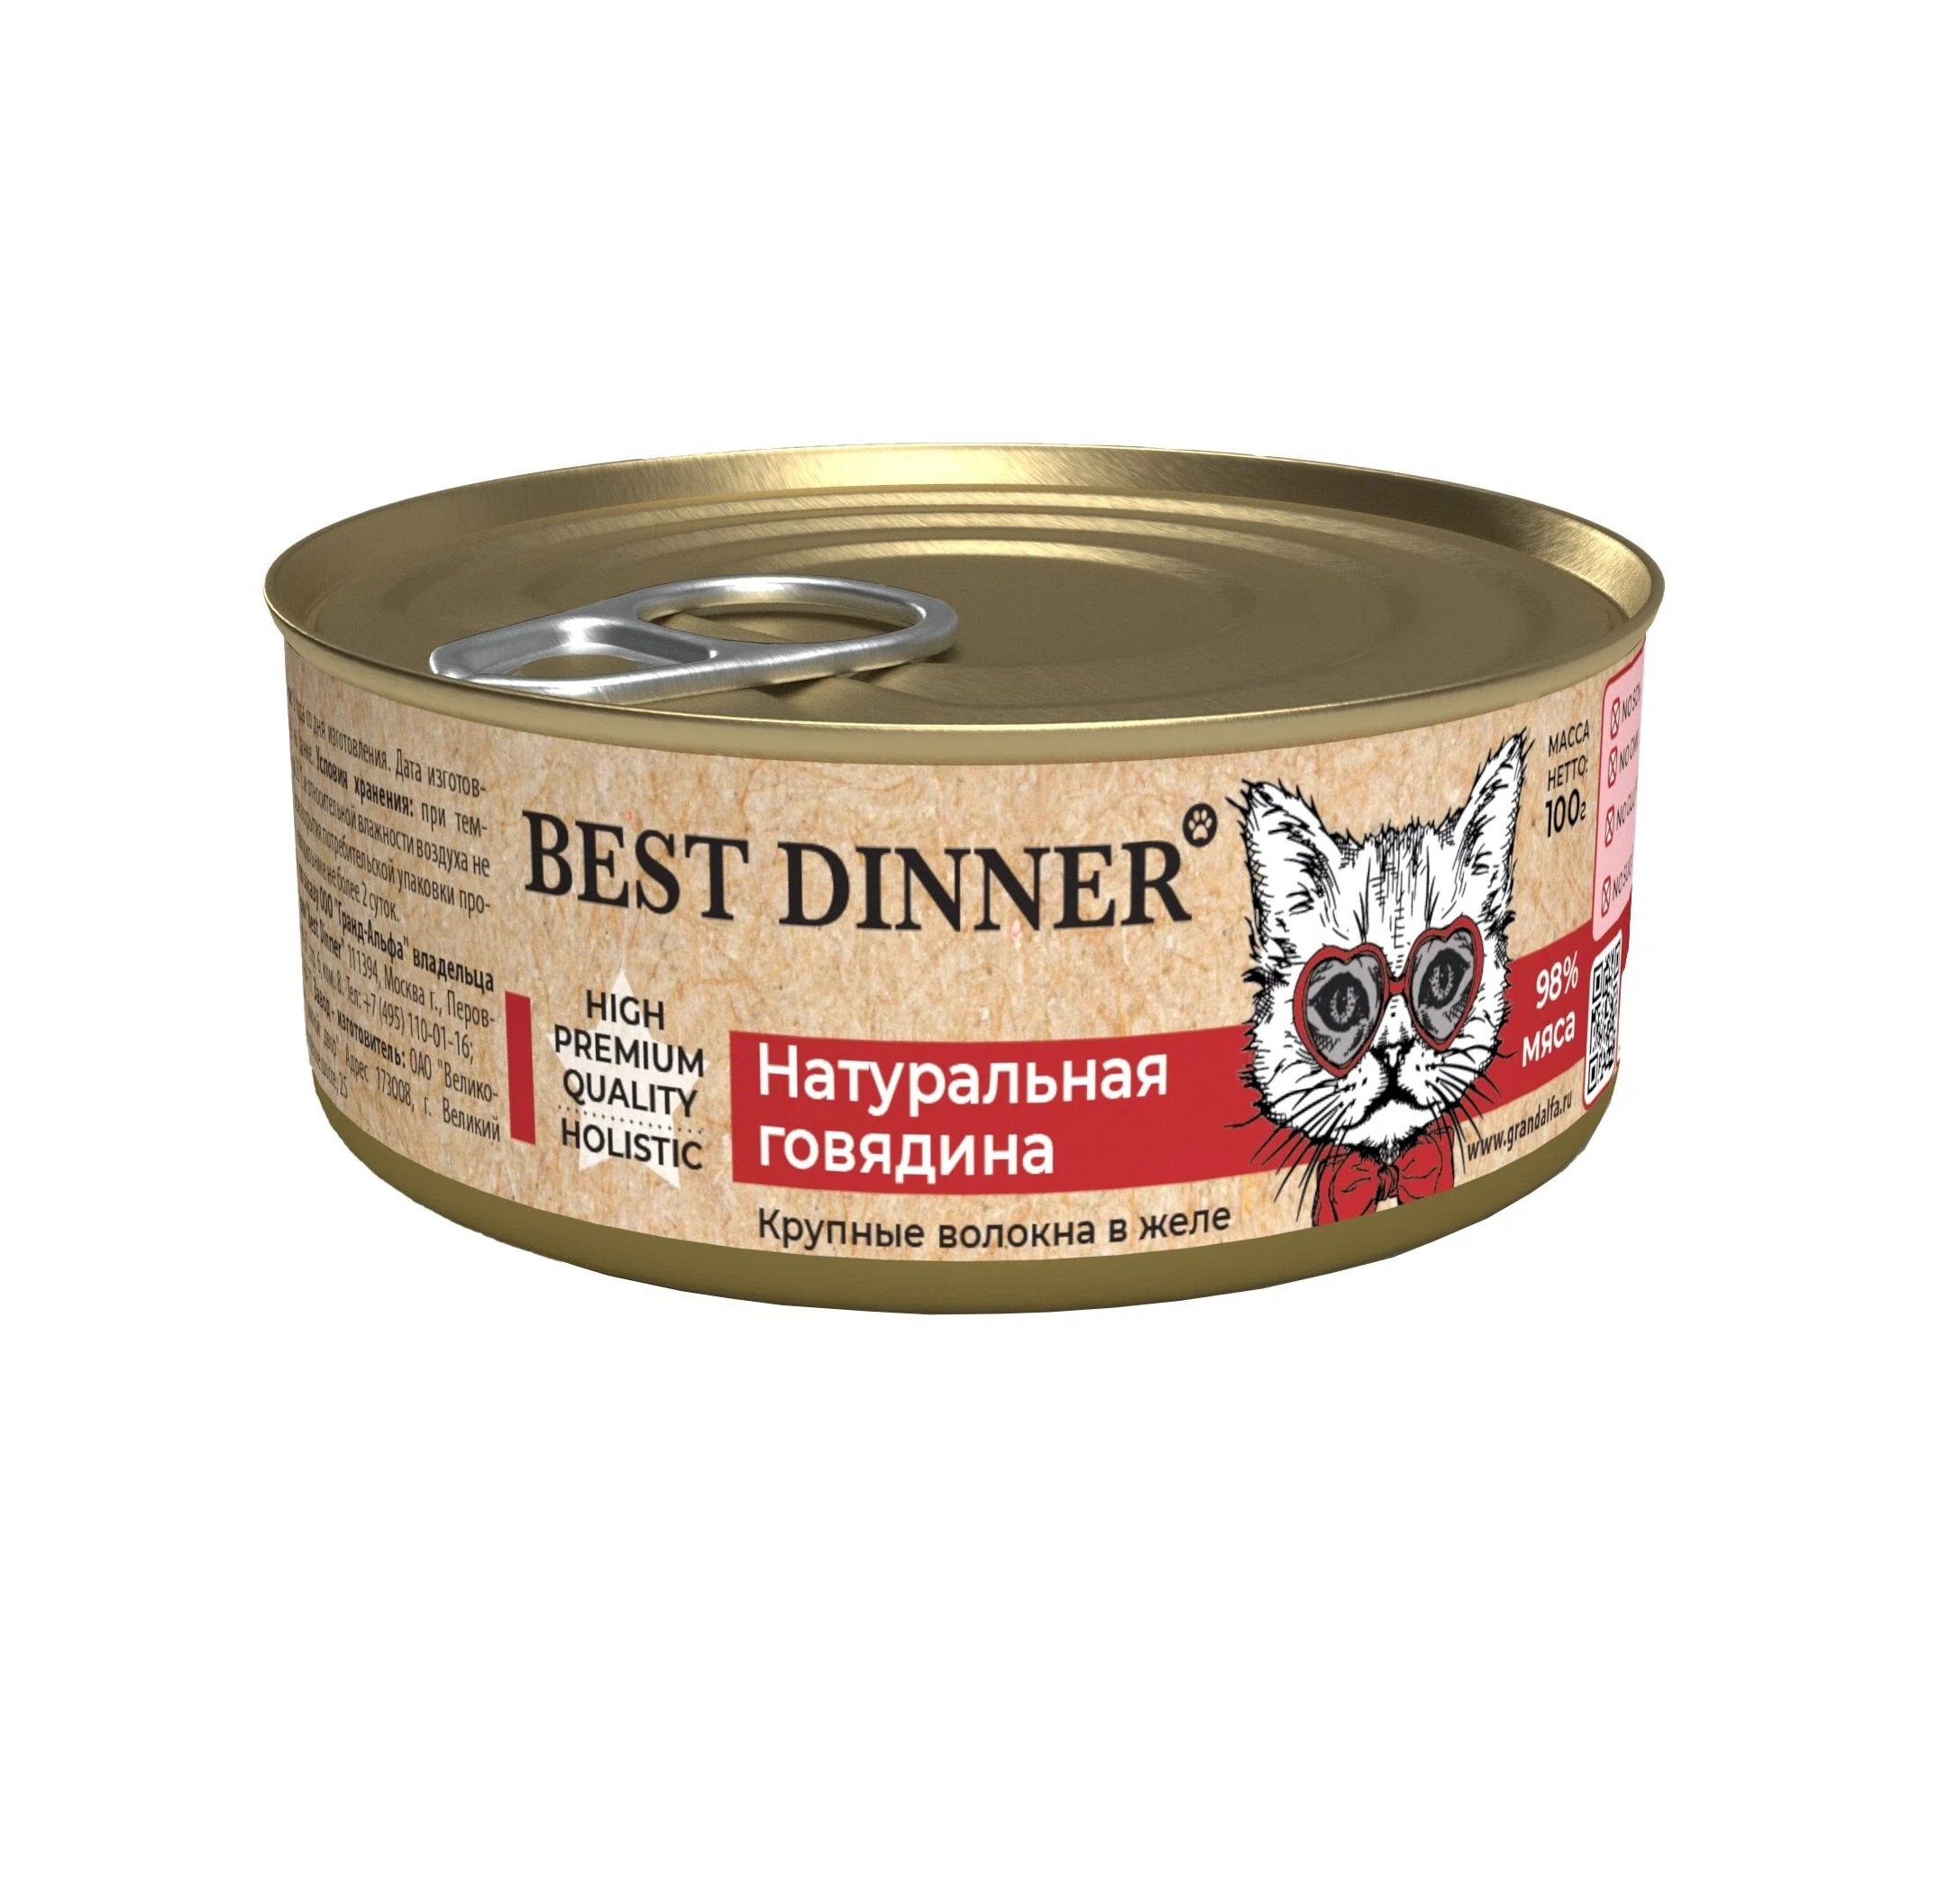 Бест Диннер 100гр - Натуральная Говядина - консервы для кошек/котят (Best Dinner)